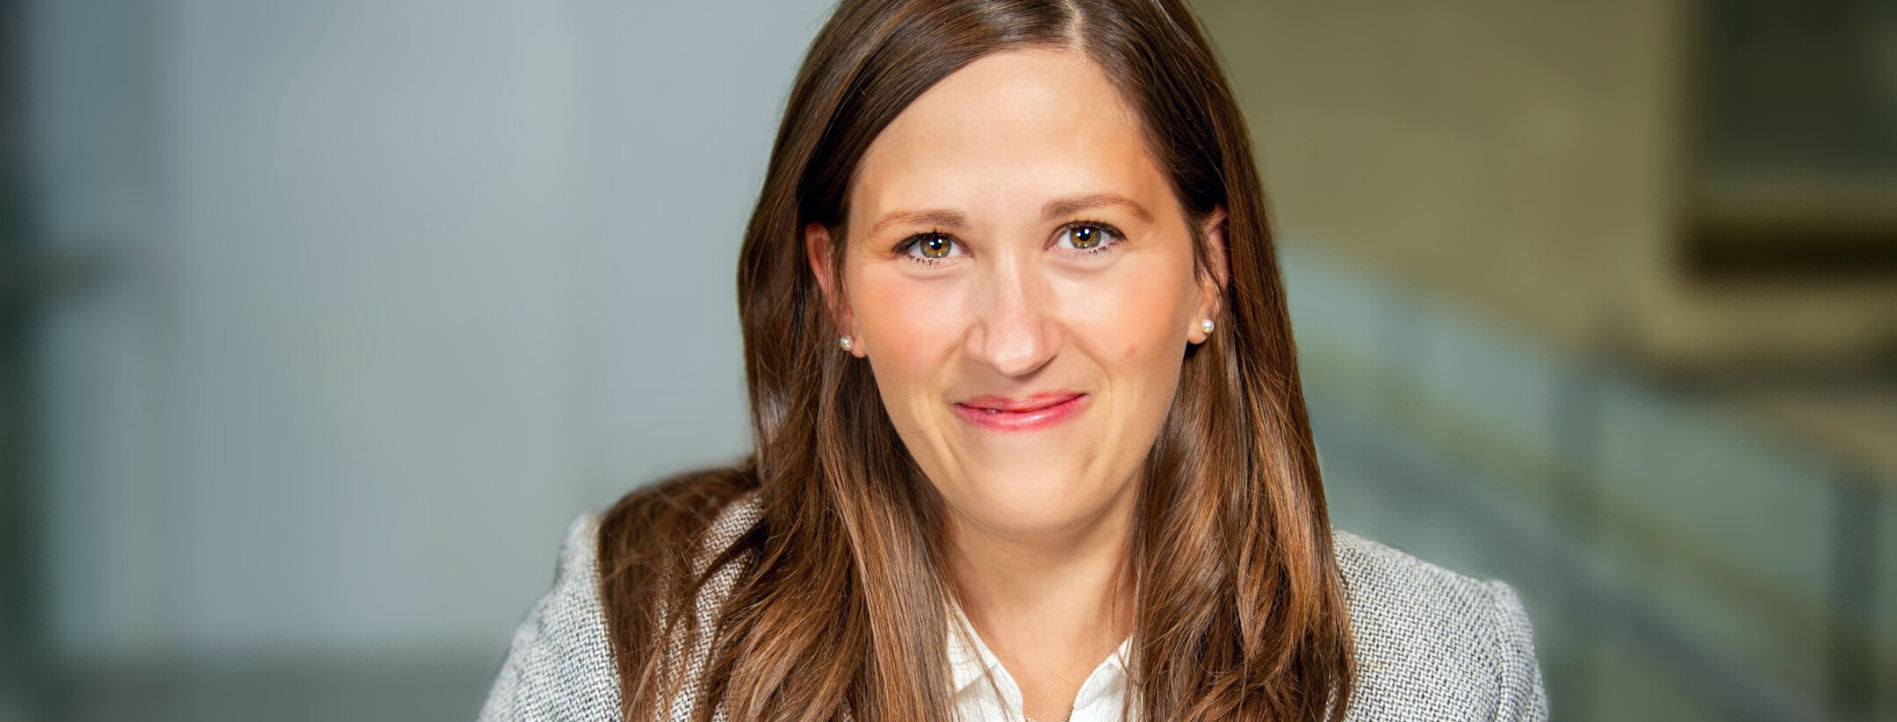 Meet Noémie Hébert-Lalonde | The Neuro - McGill University